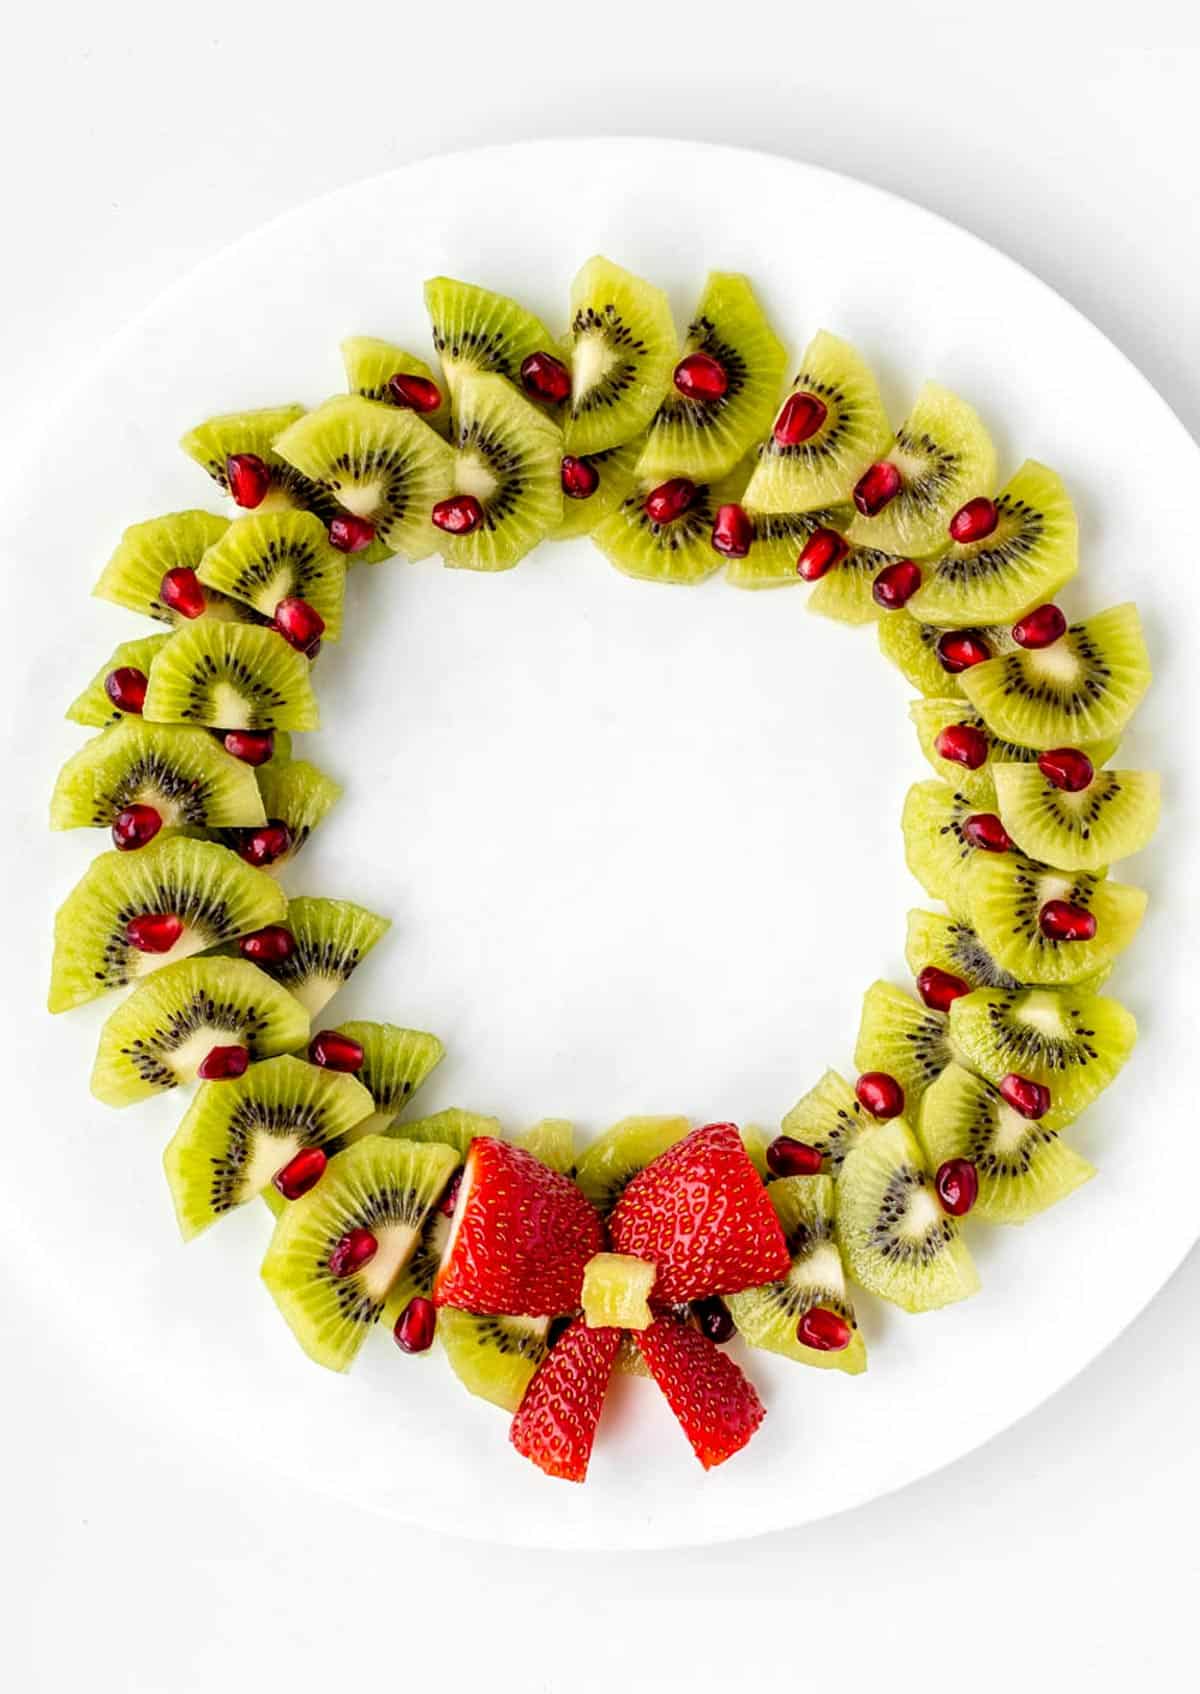 A Christmas fruit wreath on a white, circular platter.